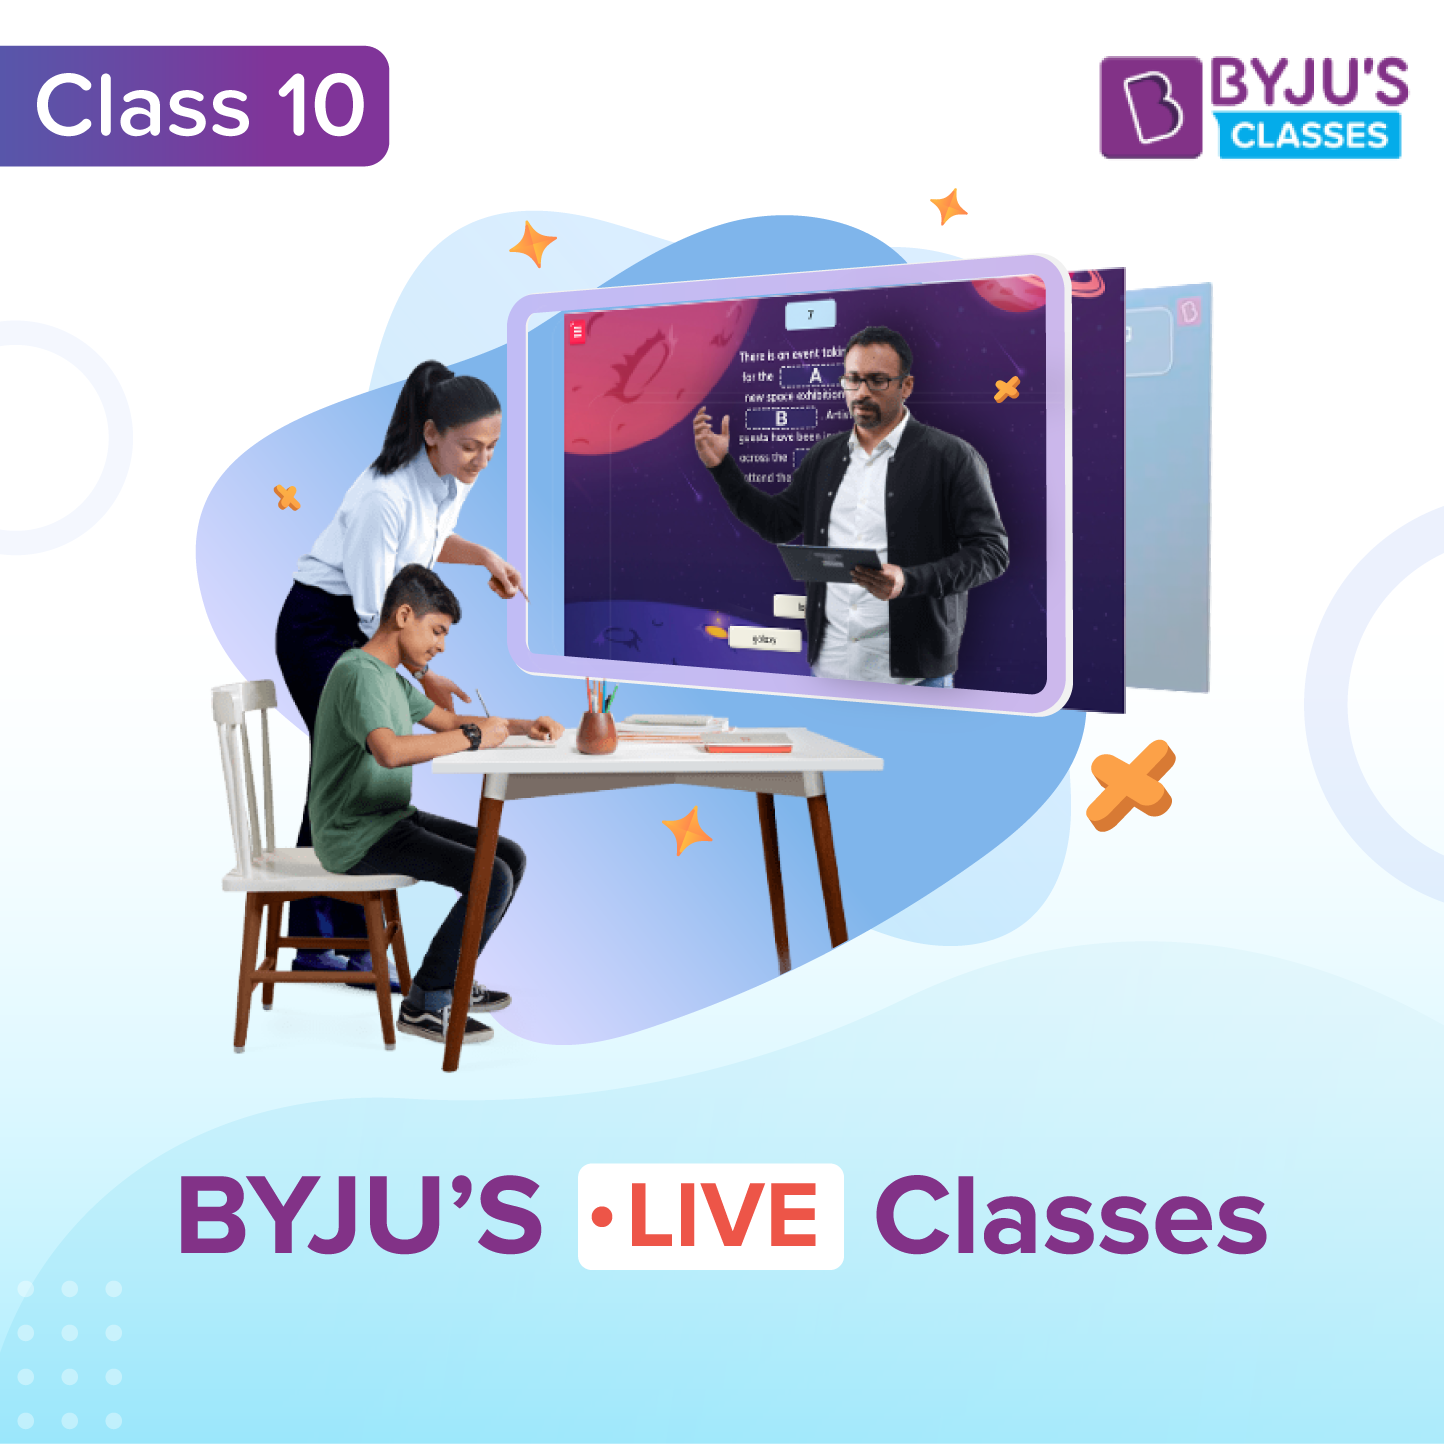 BYJU'S Live Classes - Class 10